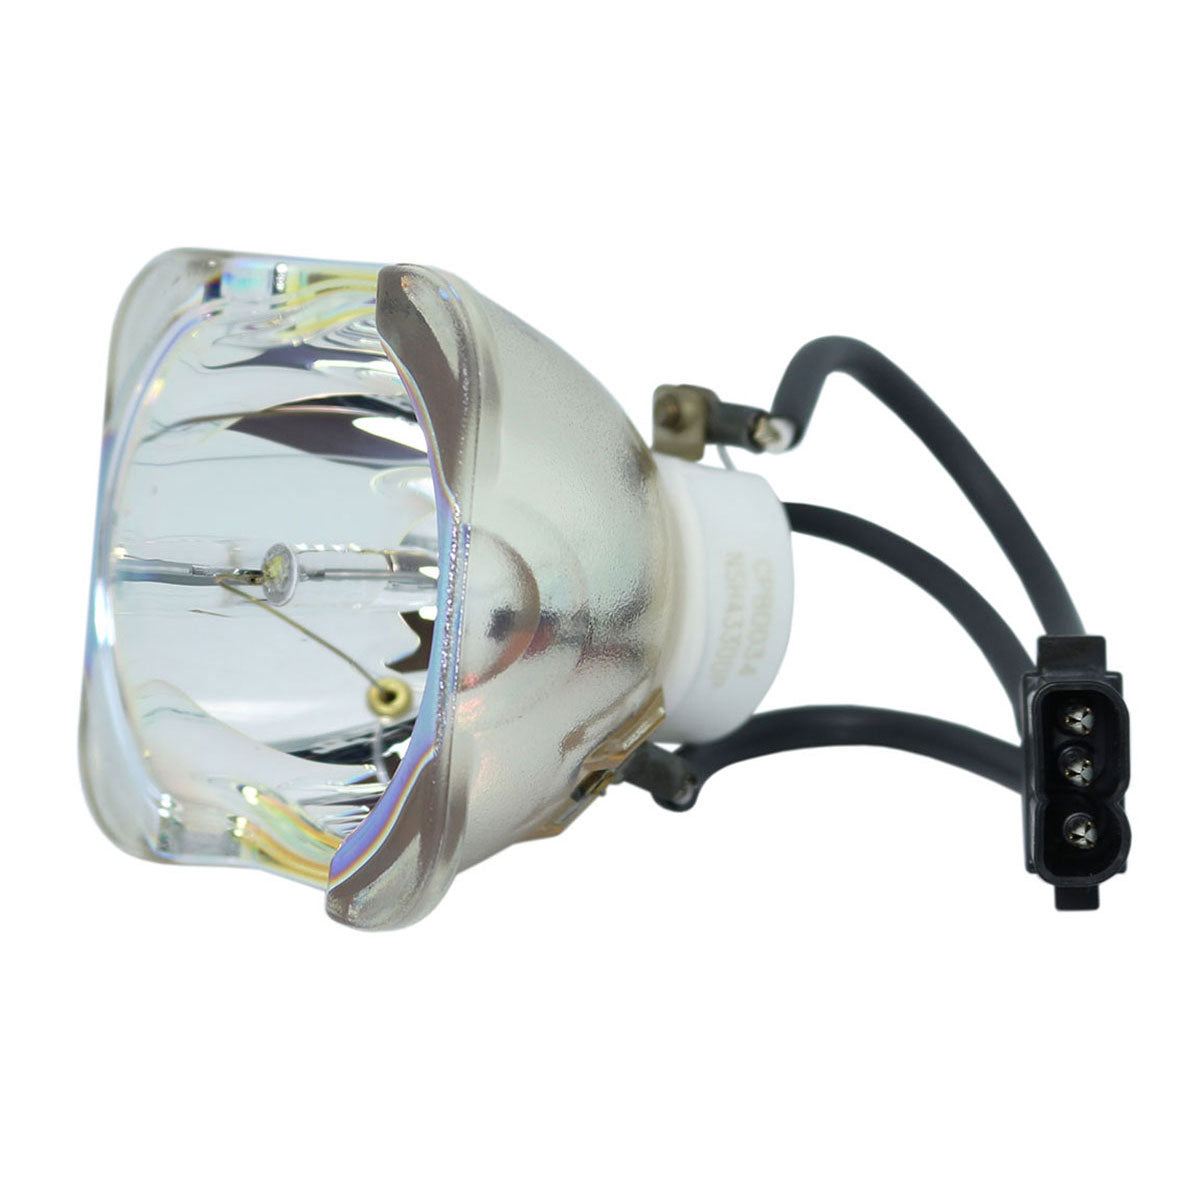 Geha 60-204511 Ushio Projector Bare Lamp